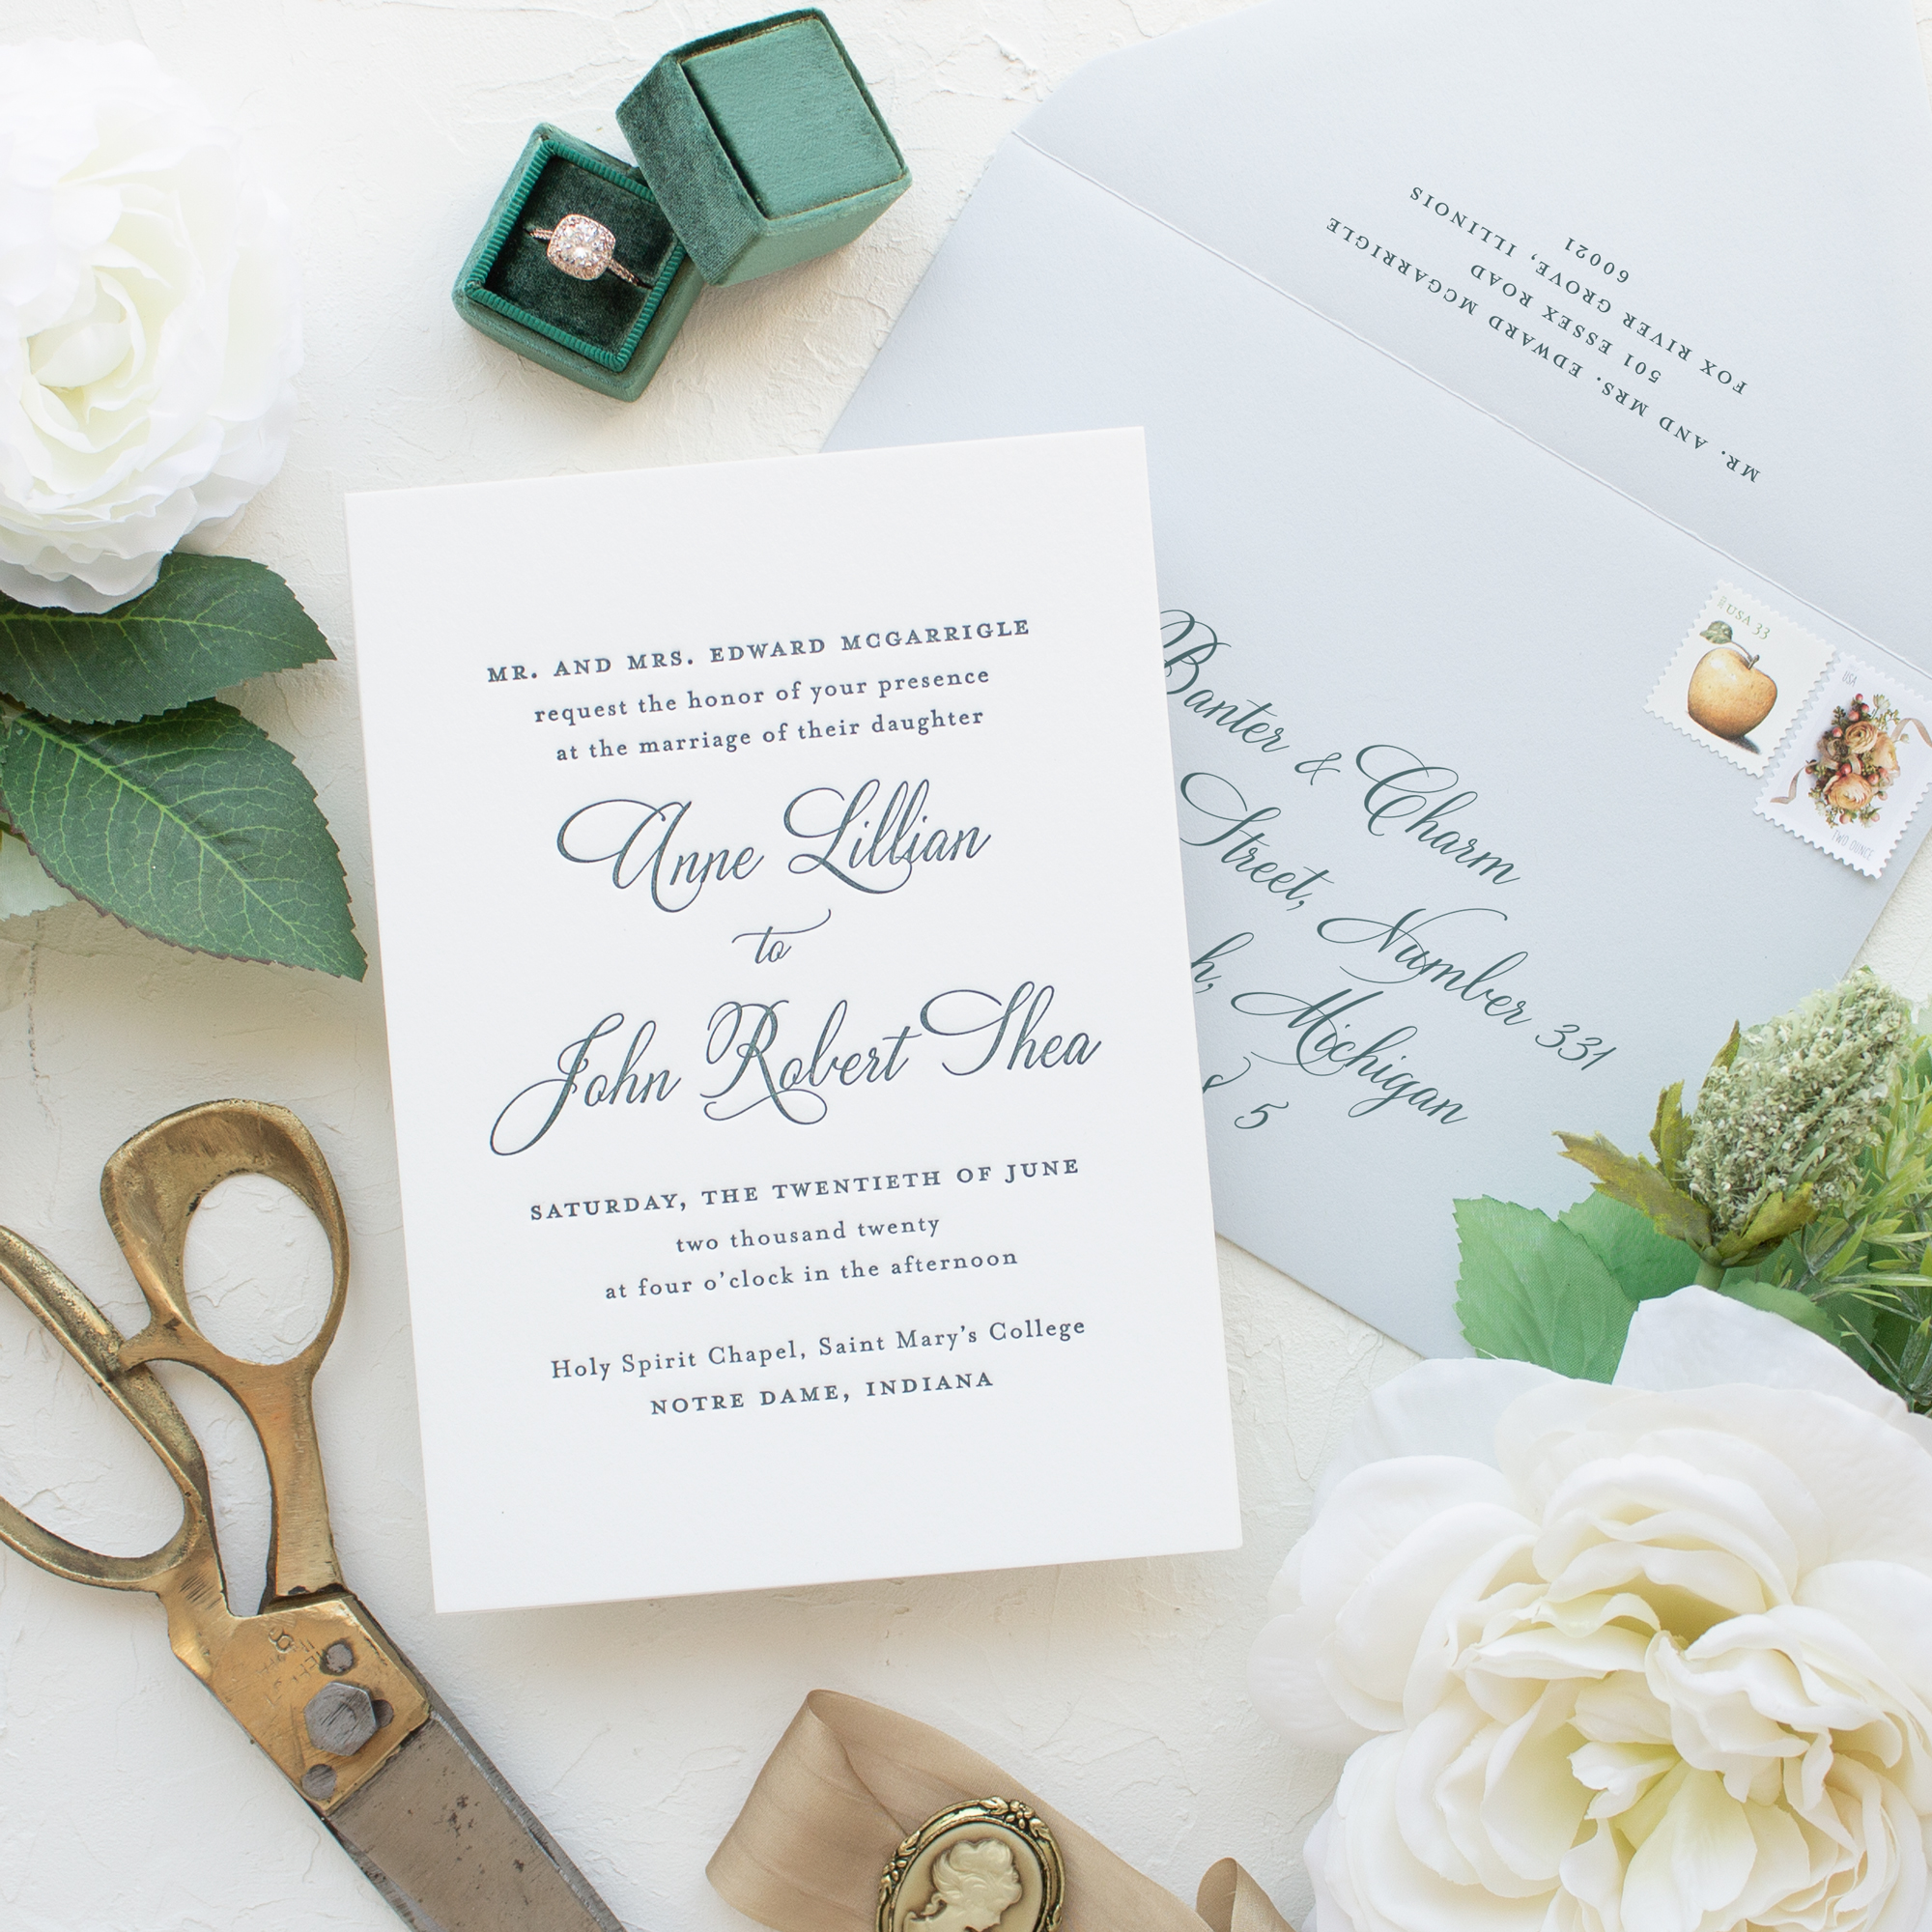 South Bend wedding invitations